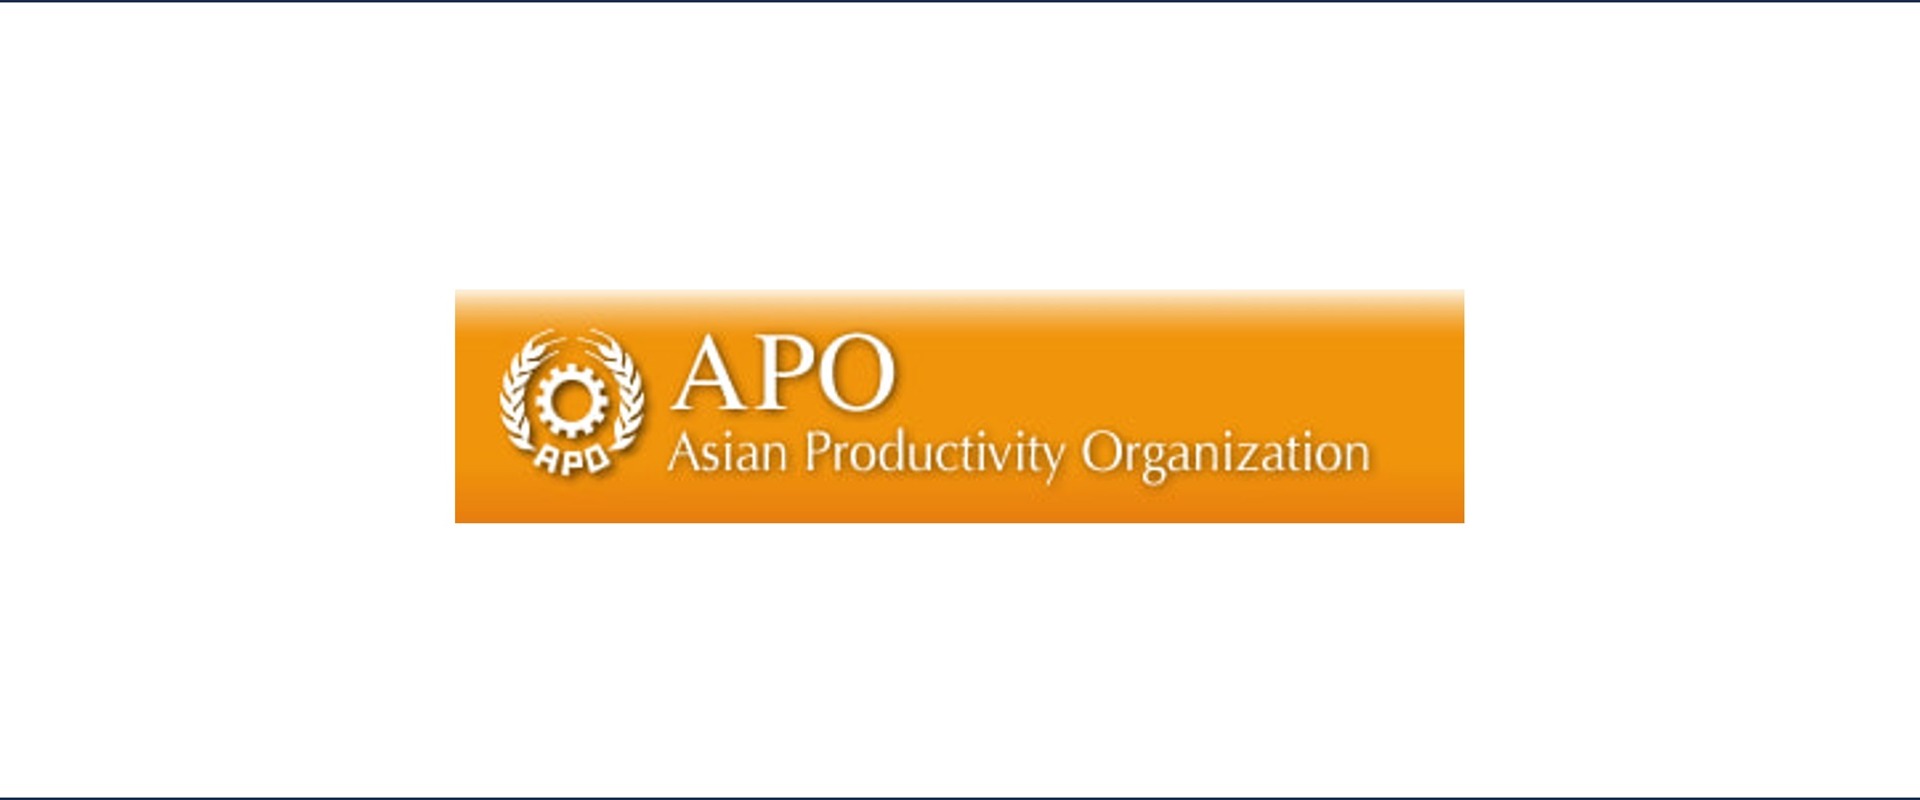 Watch the latest APO Productivity Talk